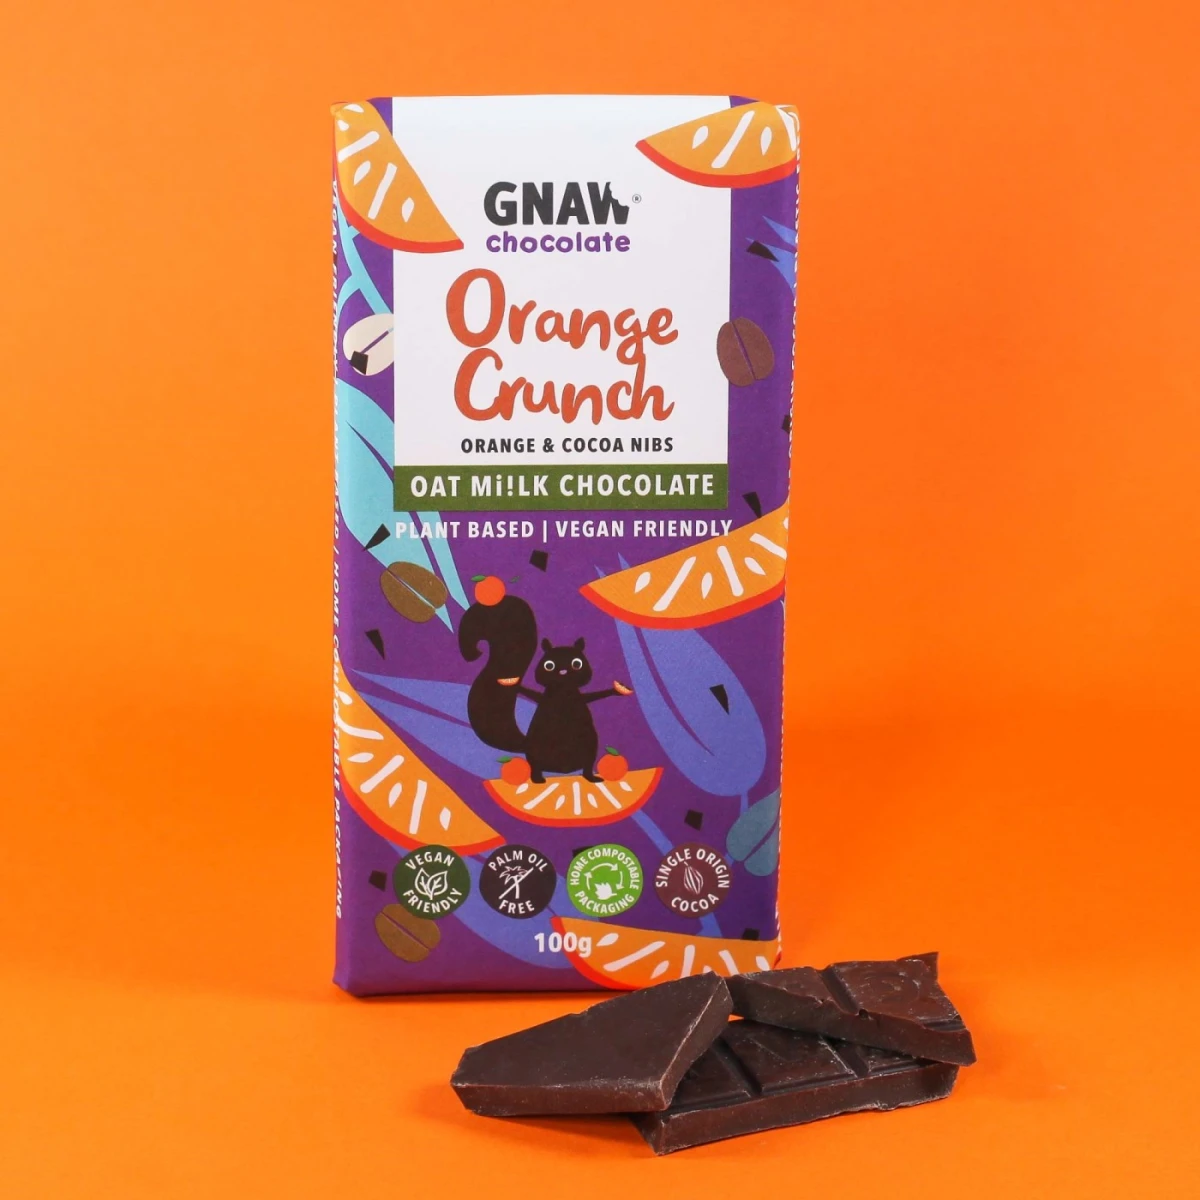 Gnaw - Orange Crunch Oat Milk Chocolate